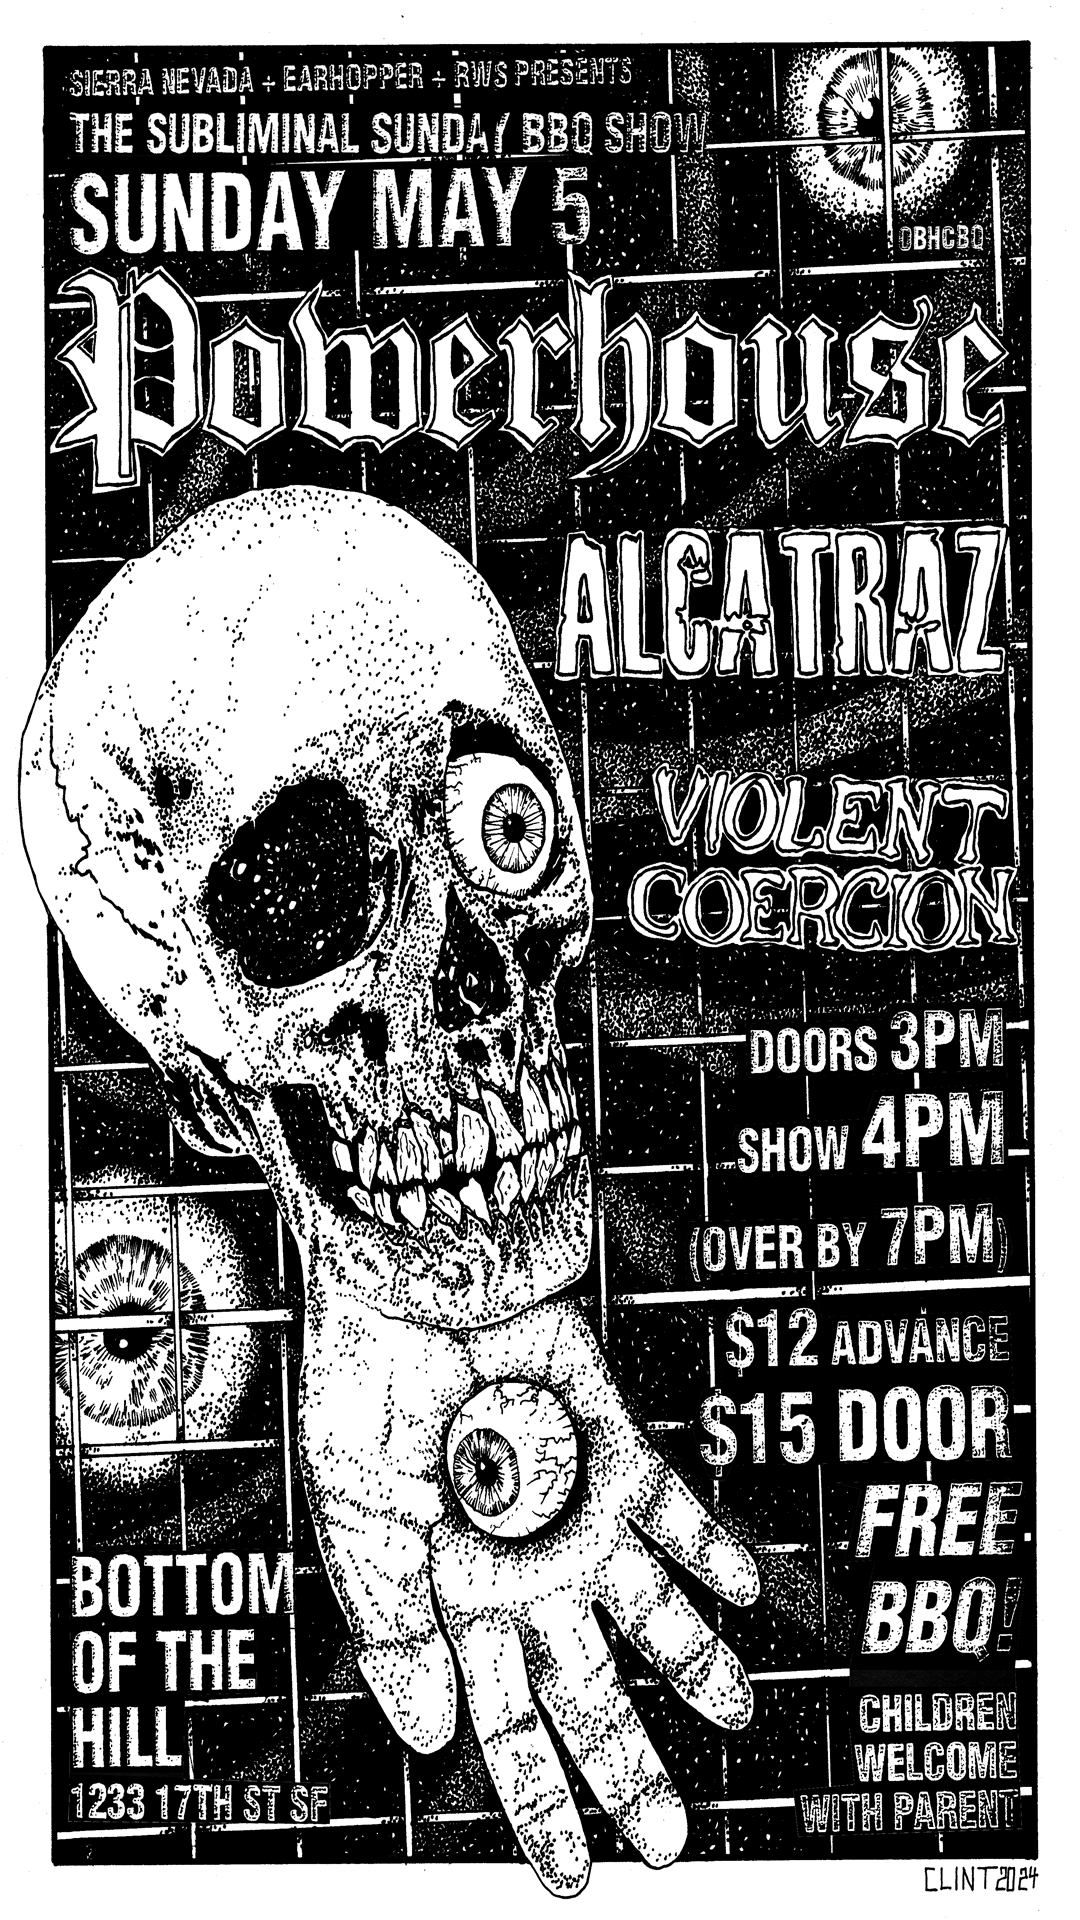 Powerhouse ~ Alcatraz ~ Violent Coercion